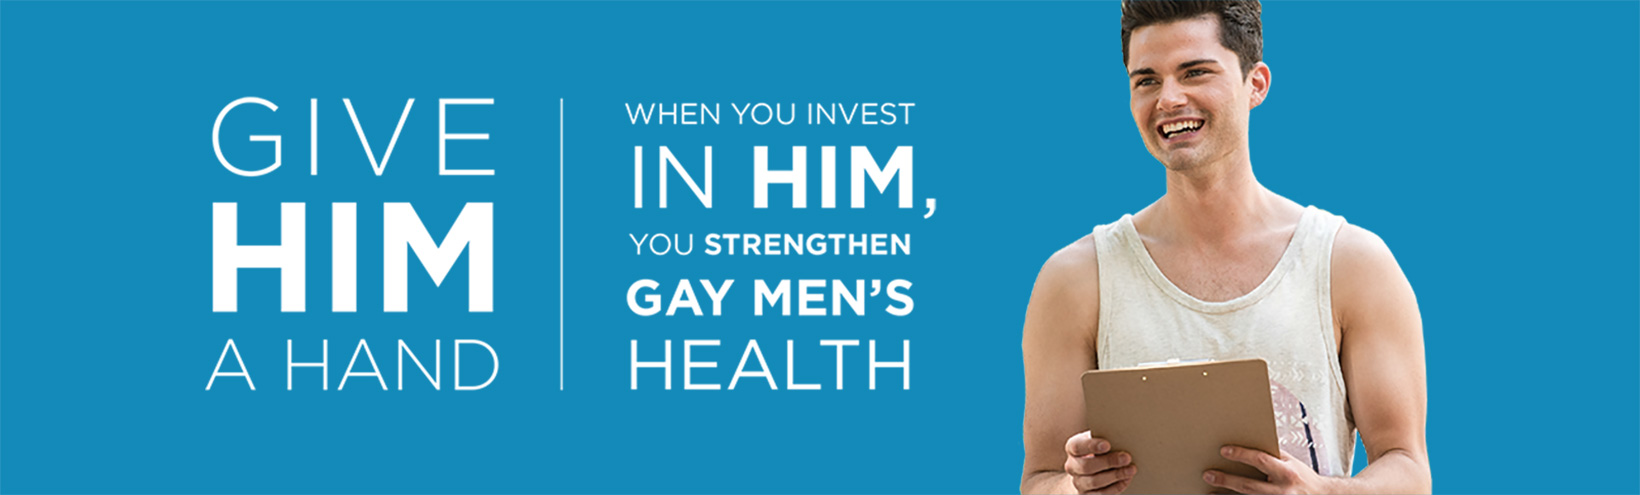 Donate Health Initiative For Men Him 